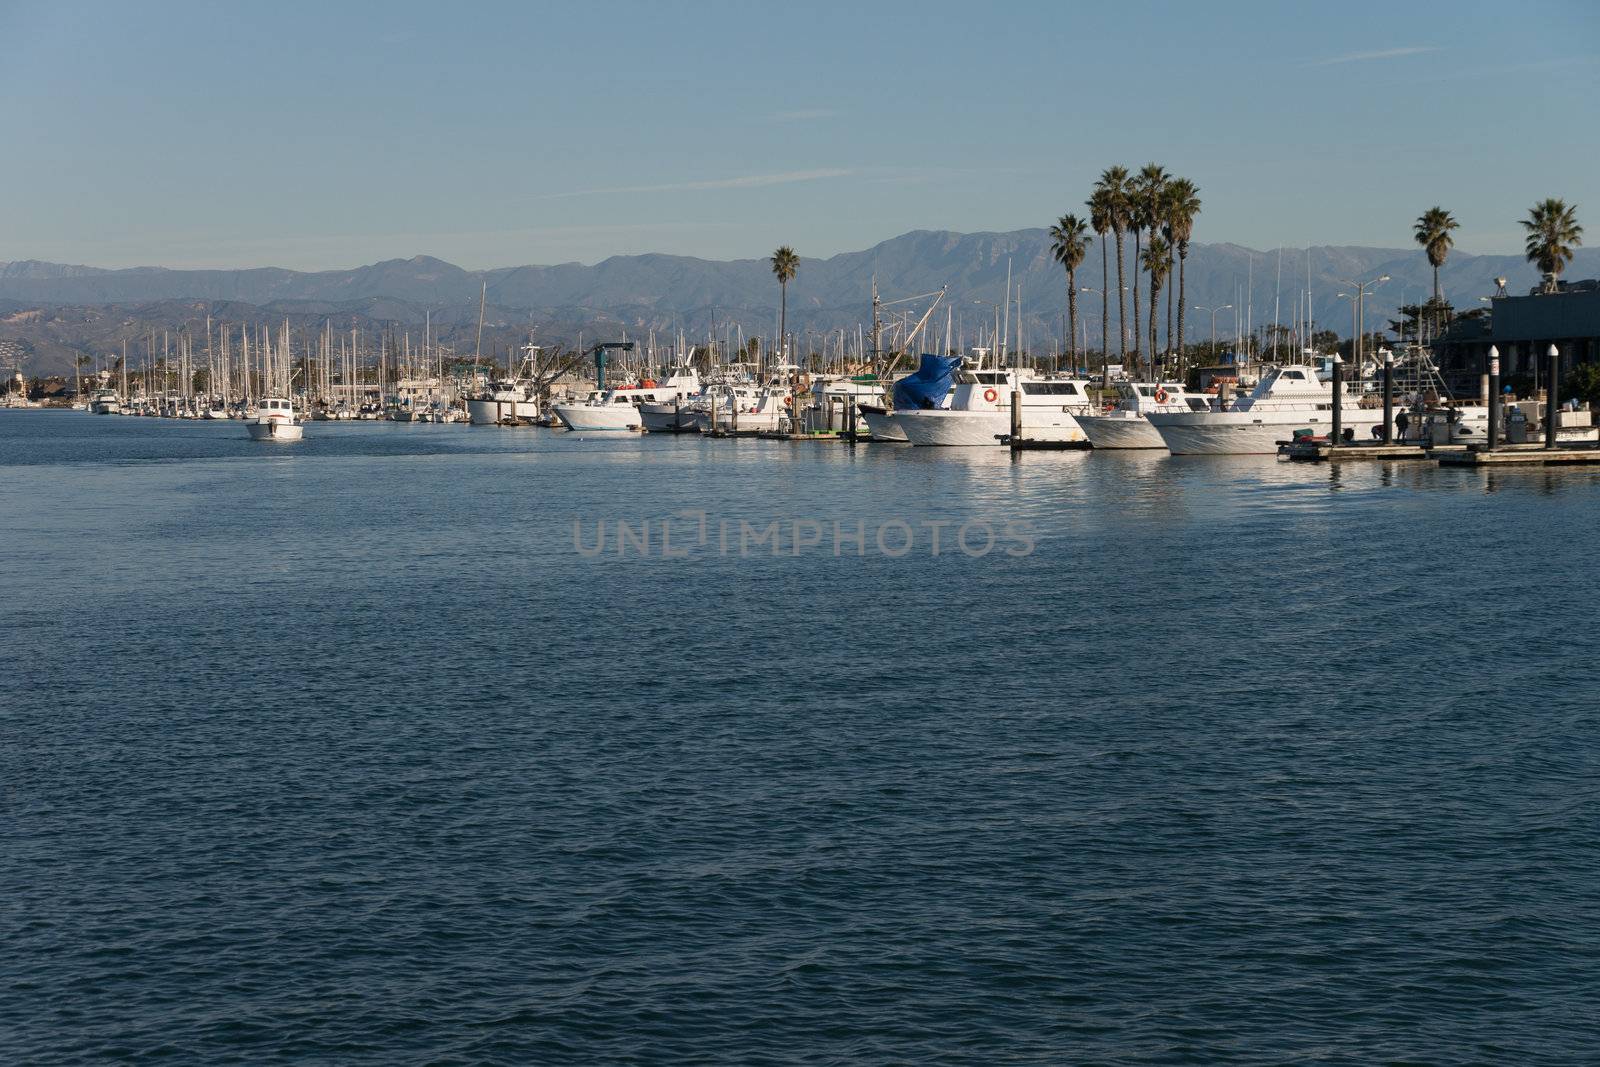 Boats at Channel Islands Marina in Oxnard California